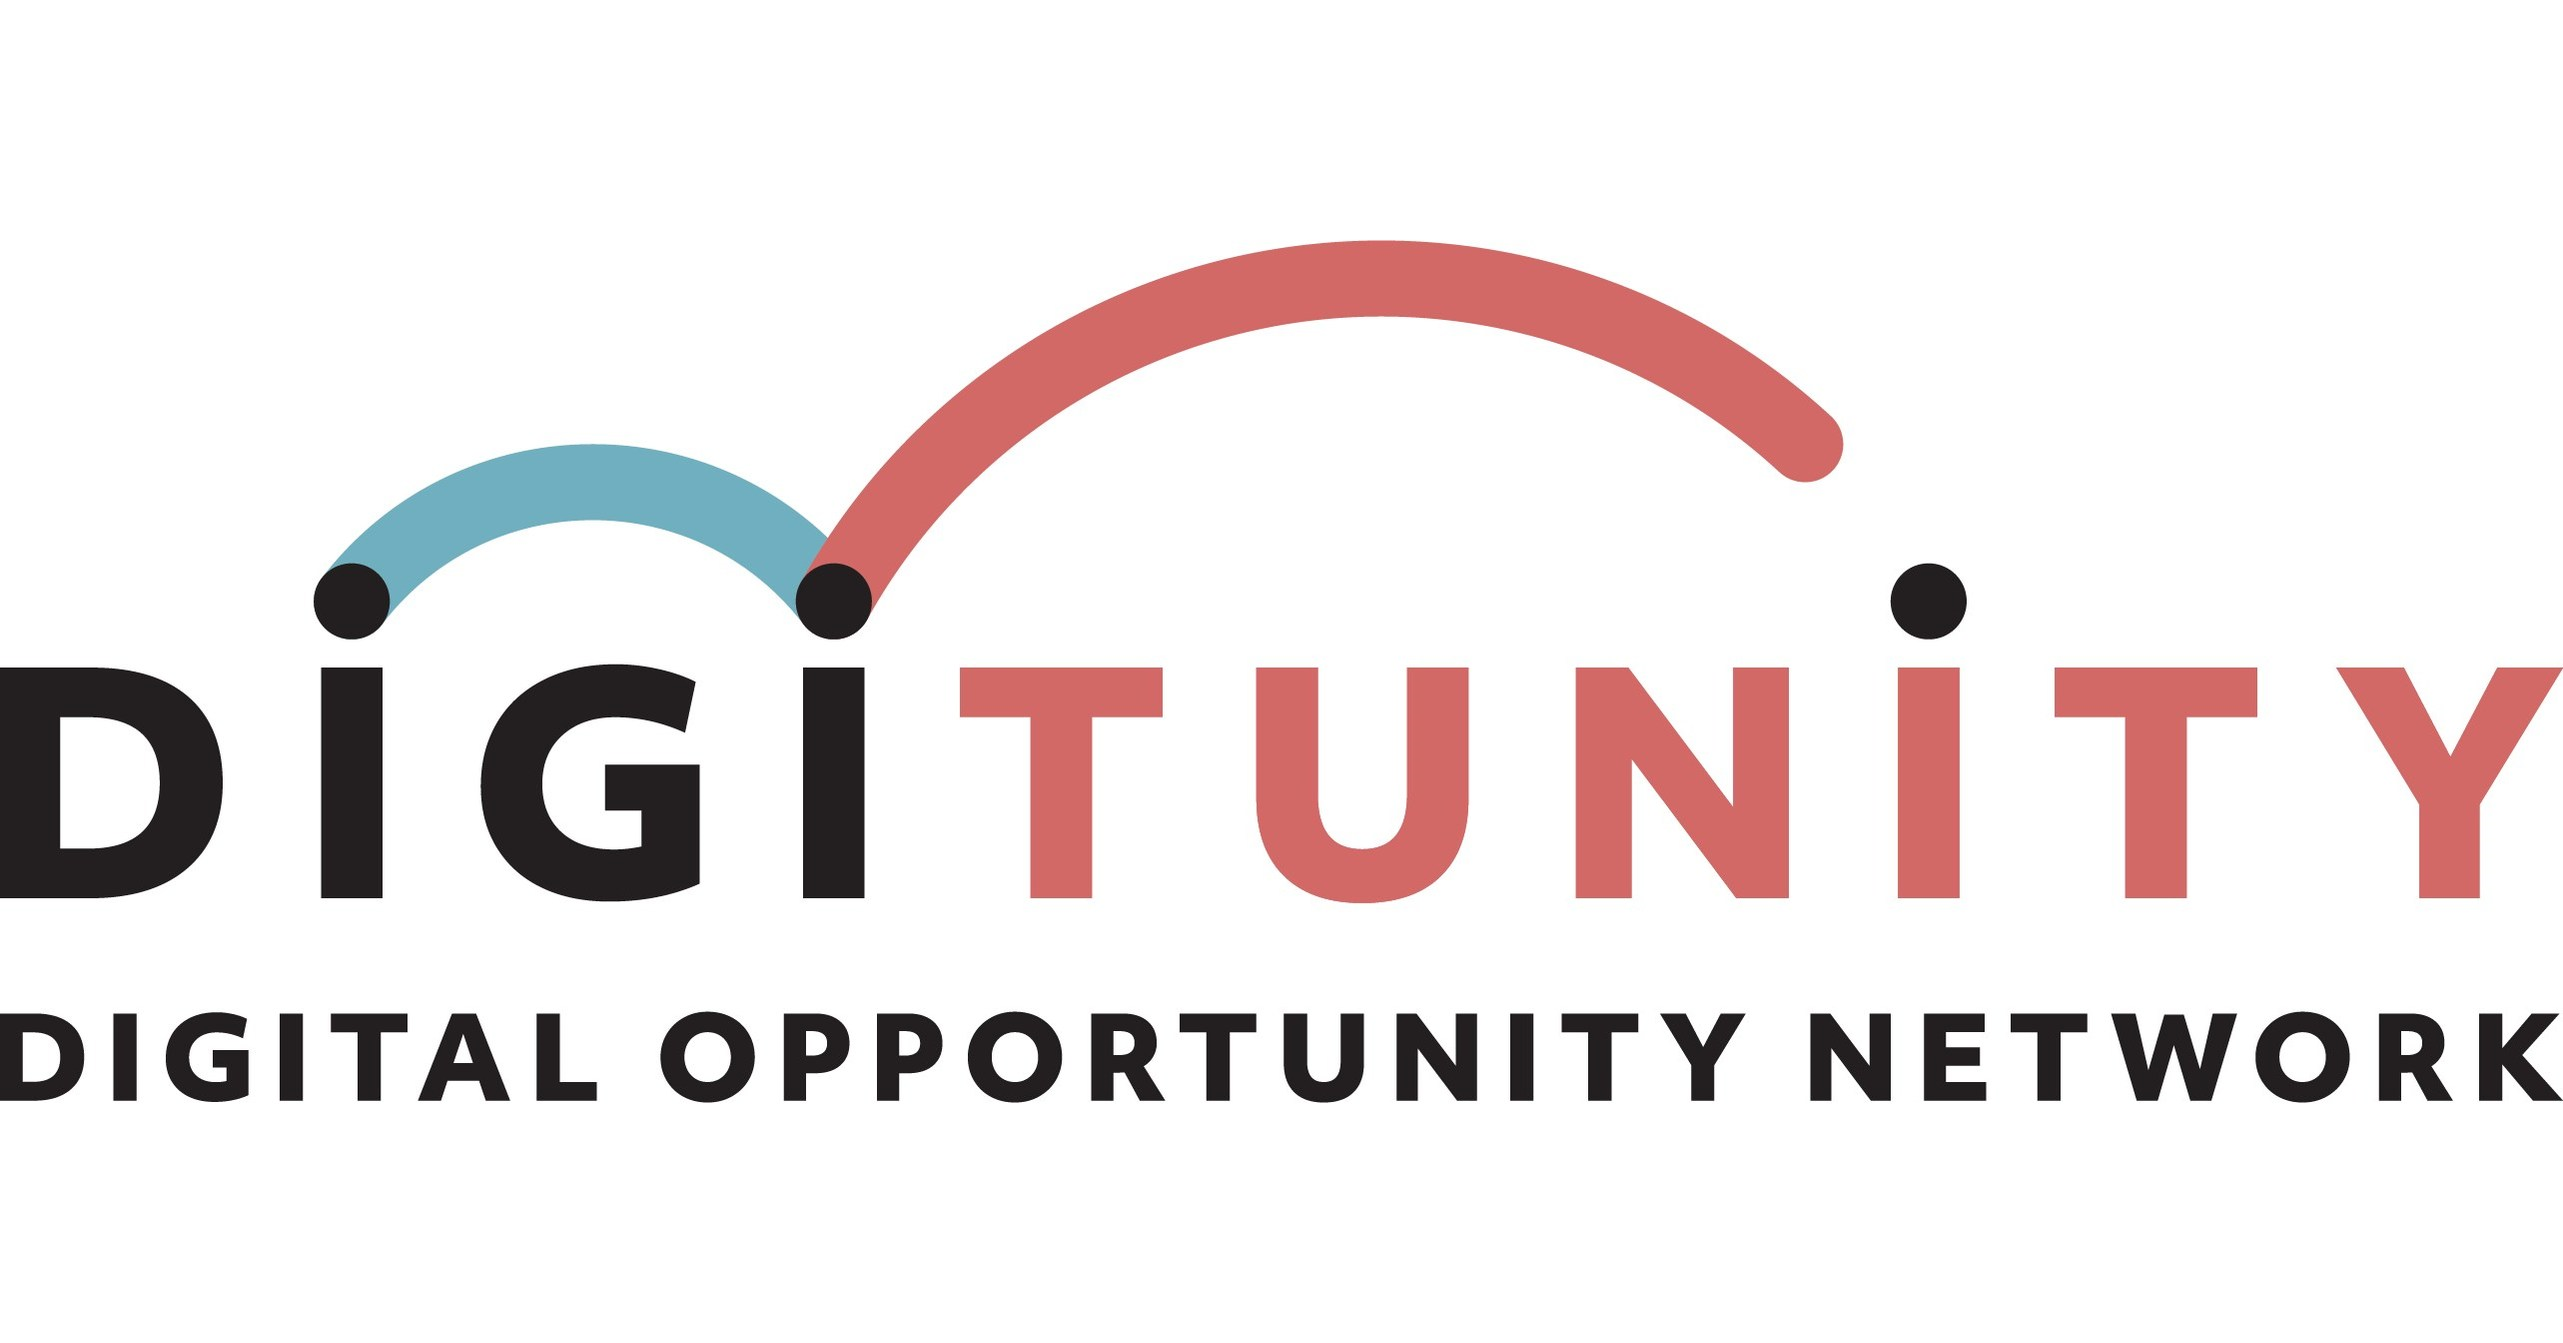 Digitunity - Digital Opportunity Network